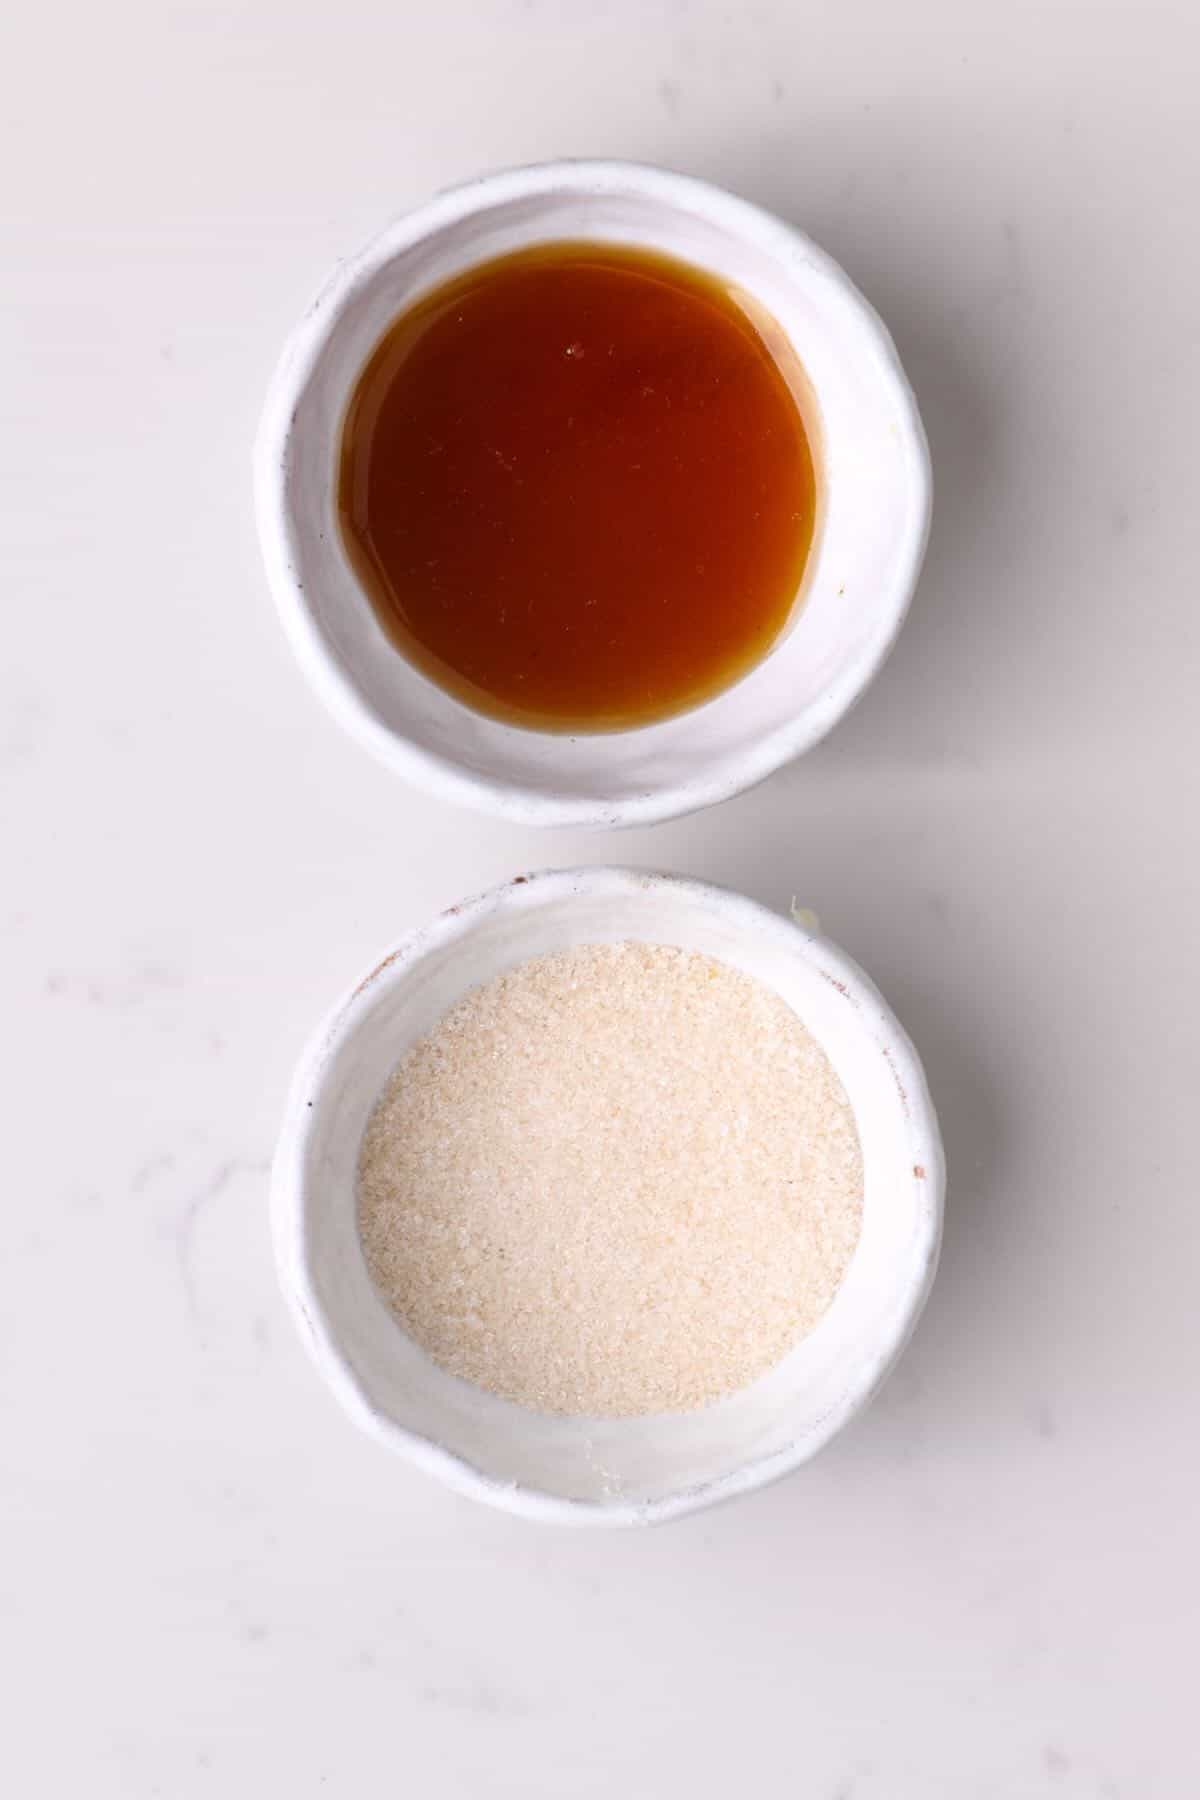 Granulated sugar and liquid sweetener in bowls